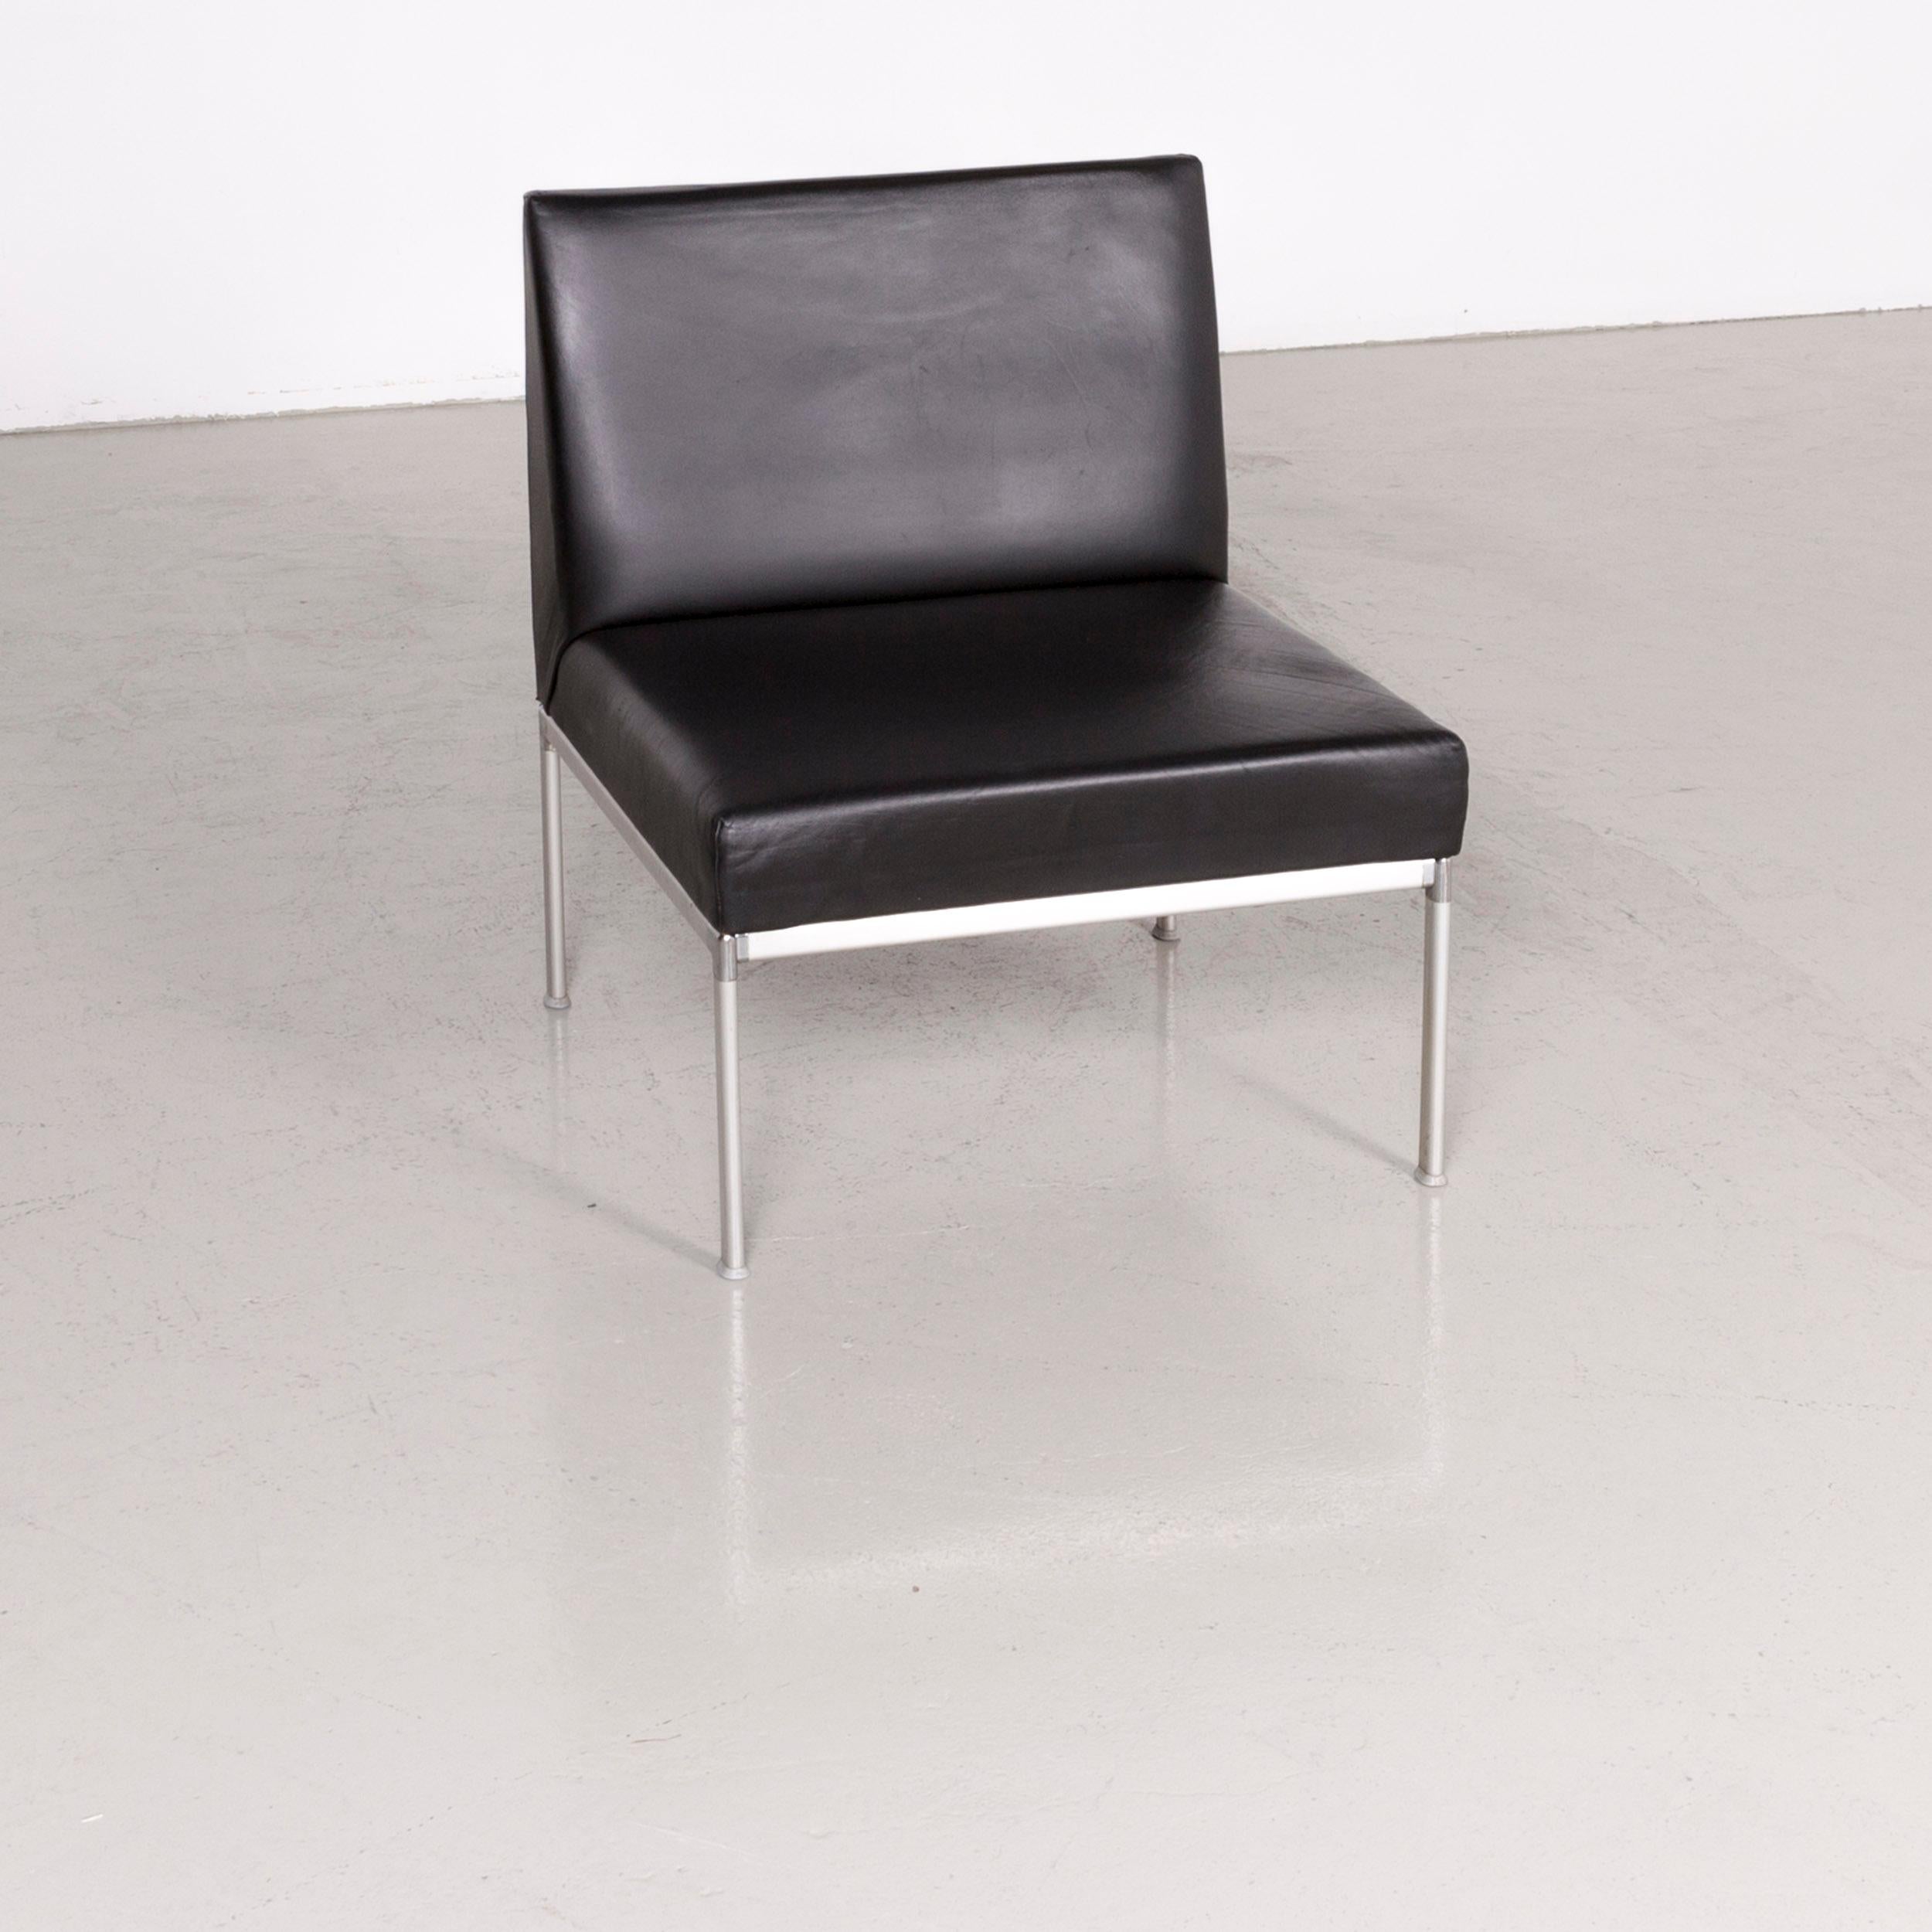 Interlübke designer leather chair black.